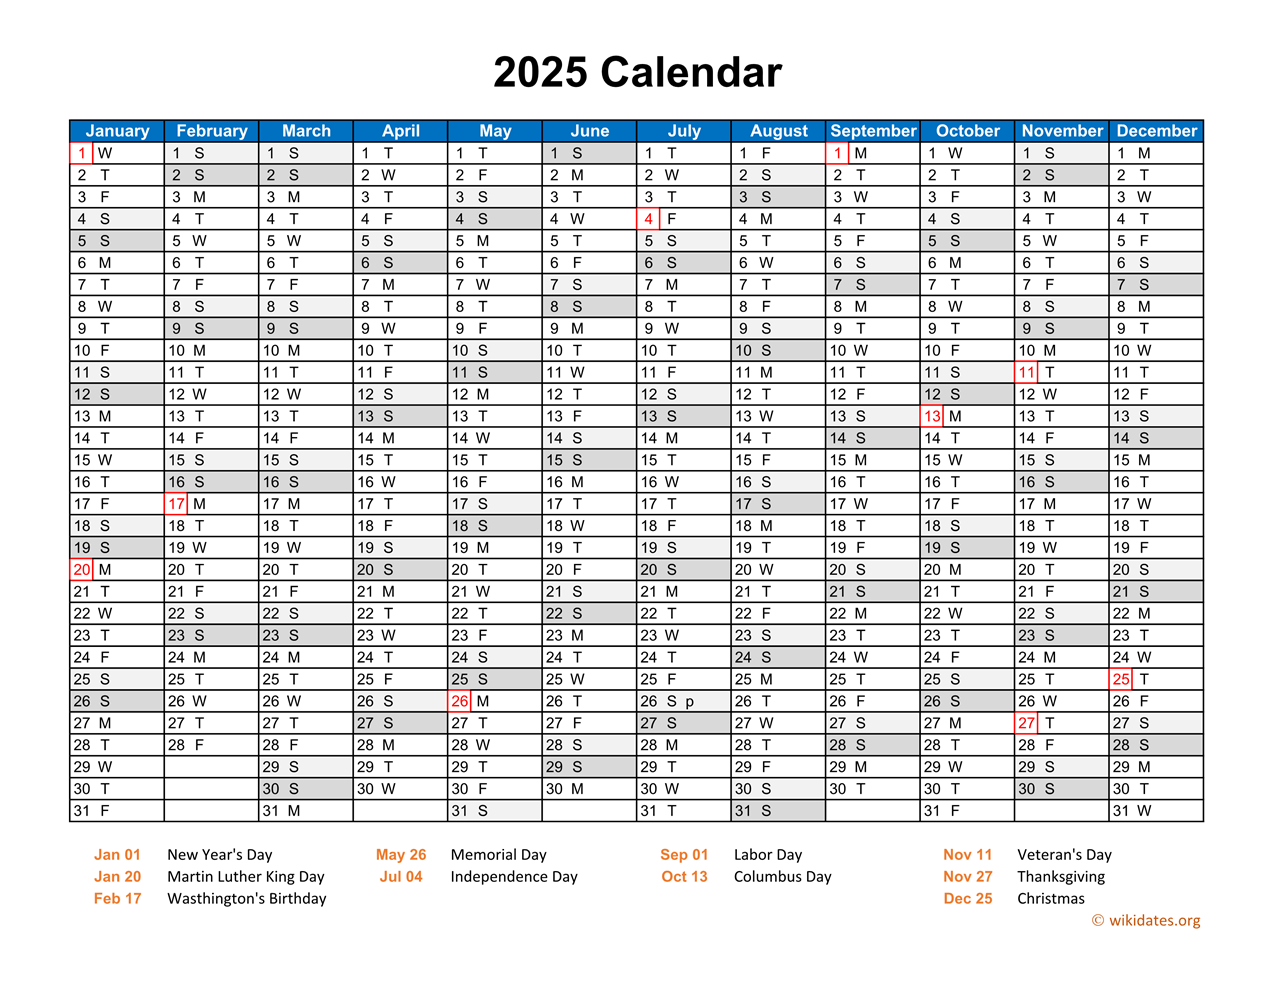 2025 Calendar Horizontal, One Page  WikiDates.org